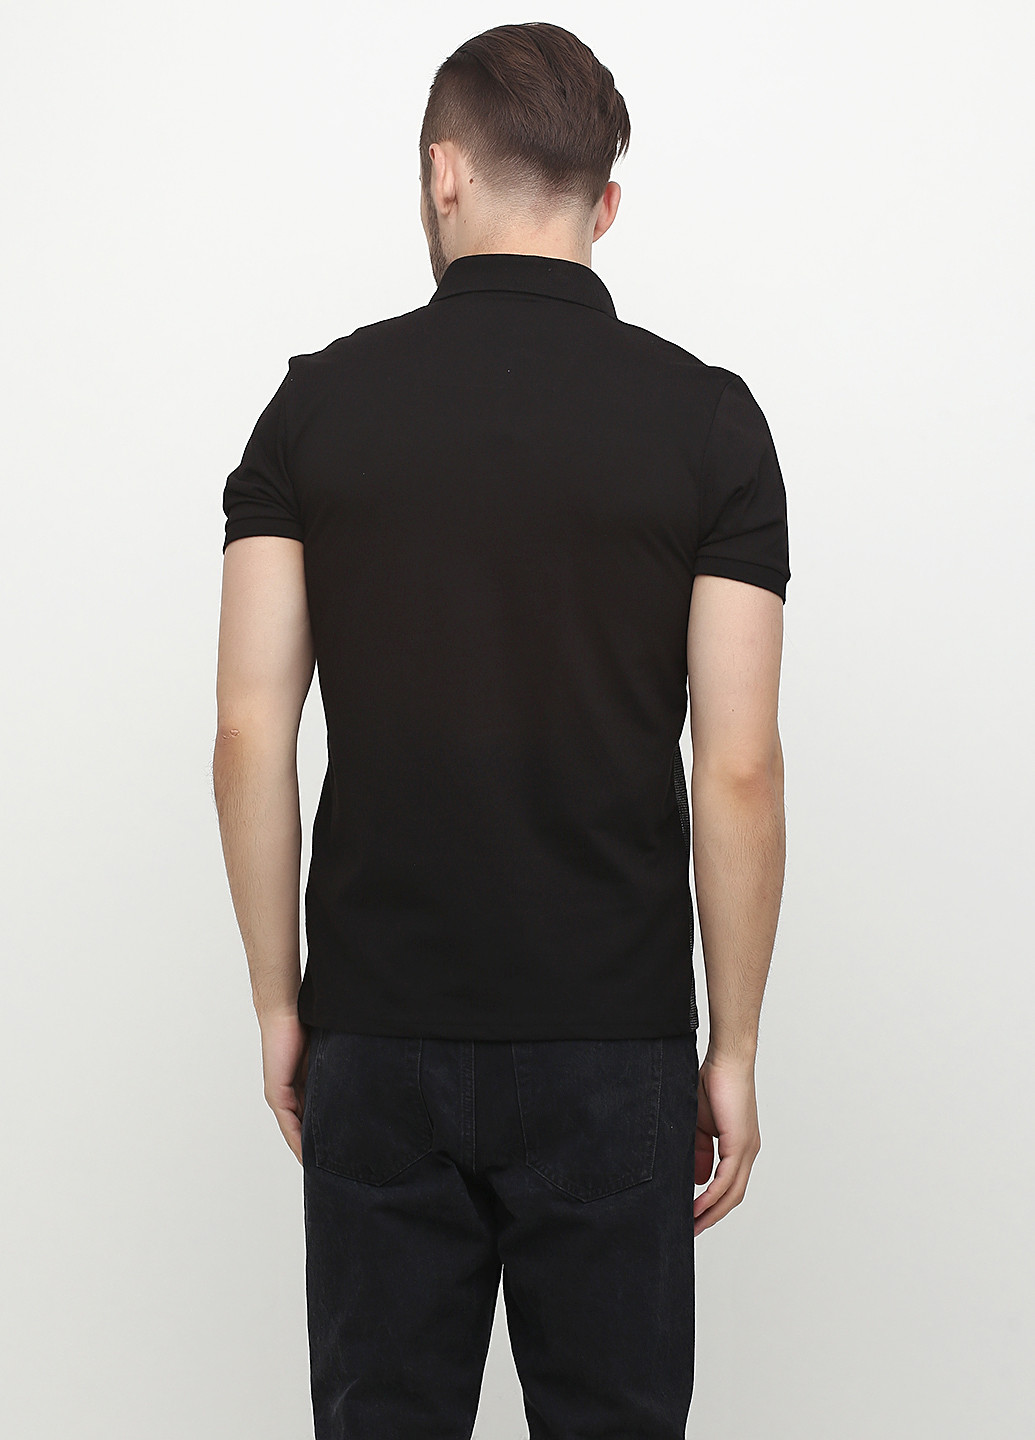 Черная футболка-поло для мужчин Madoc с геометрическим узором